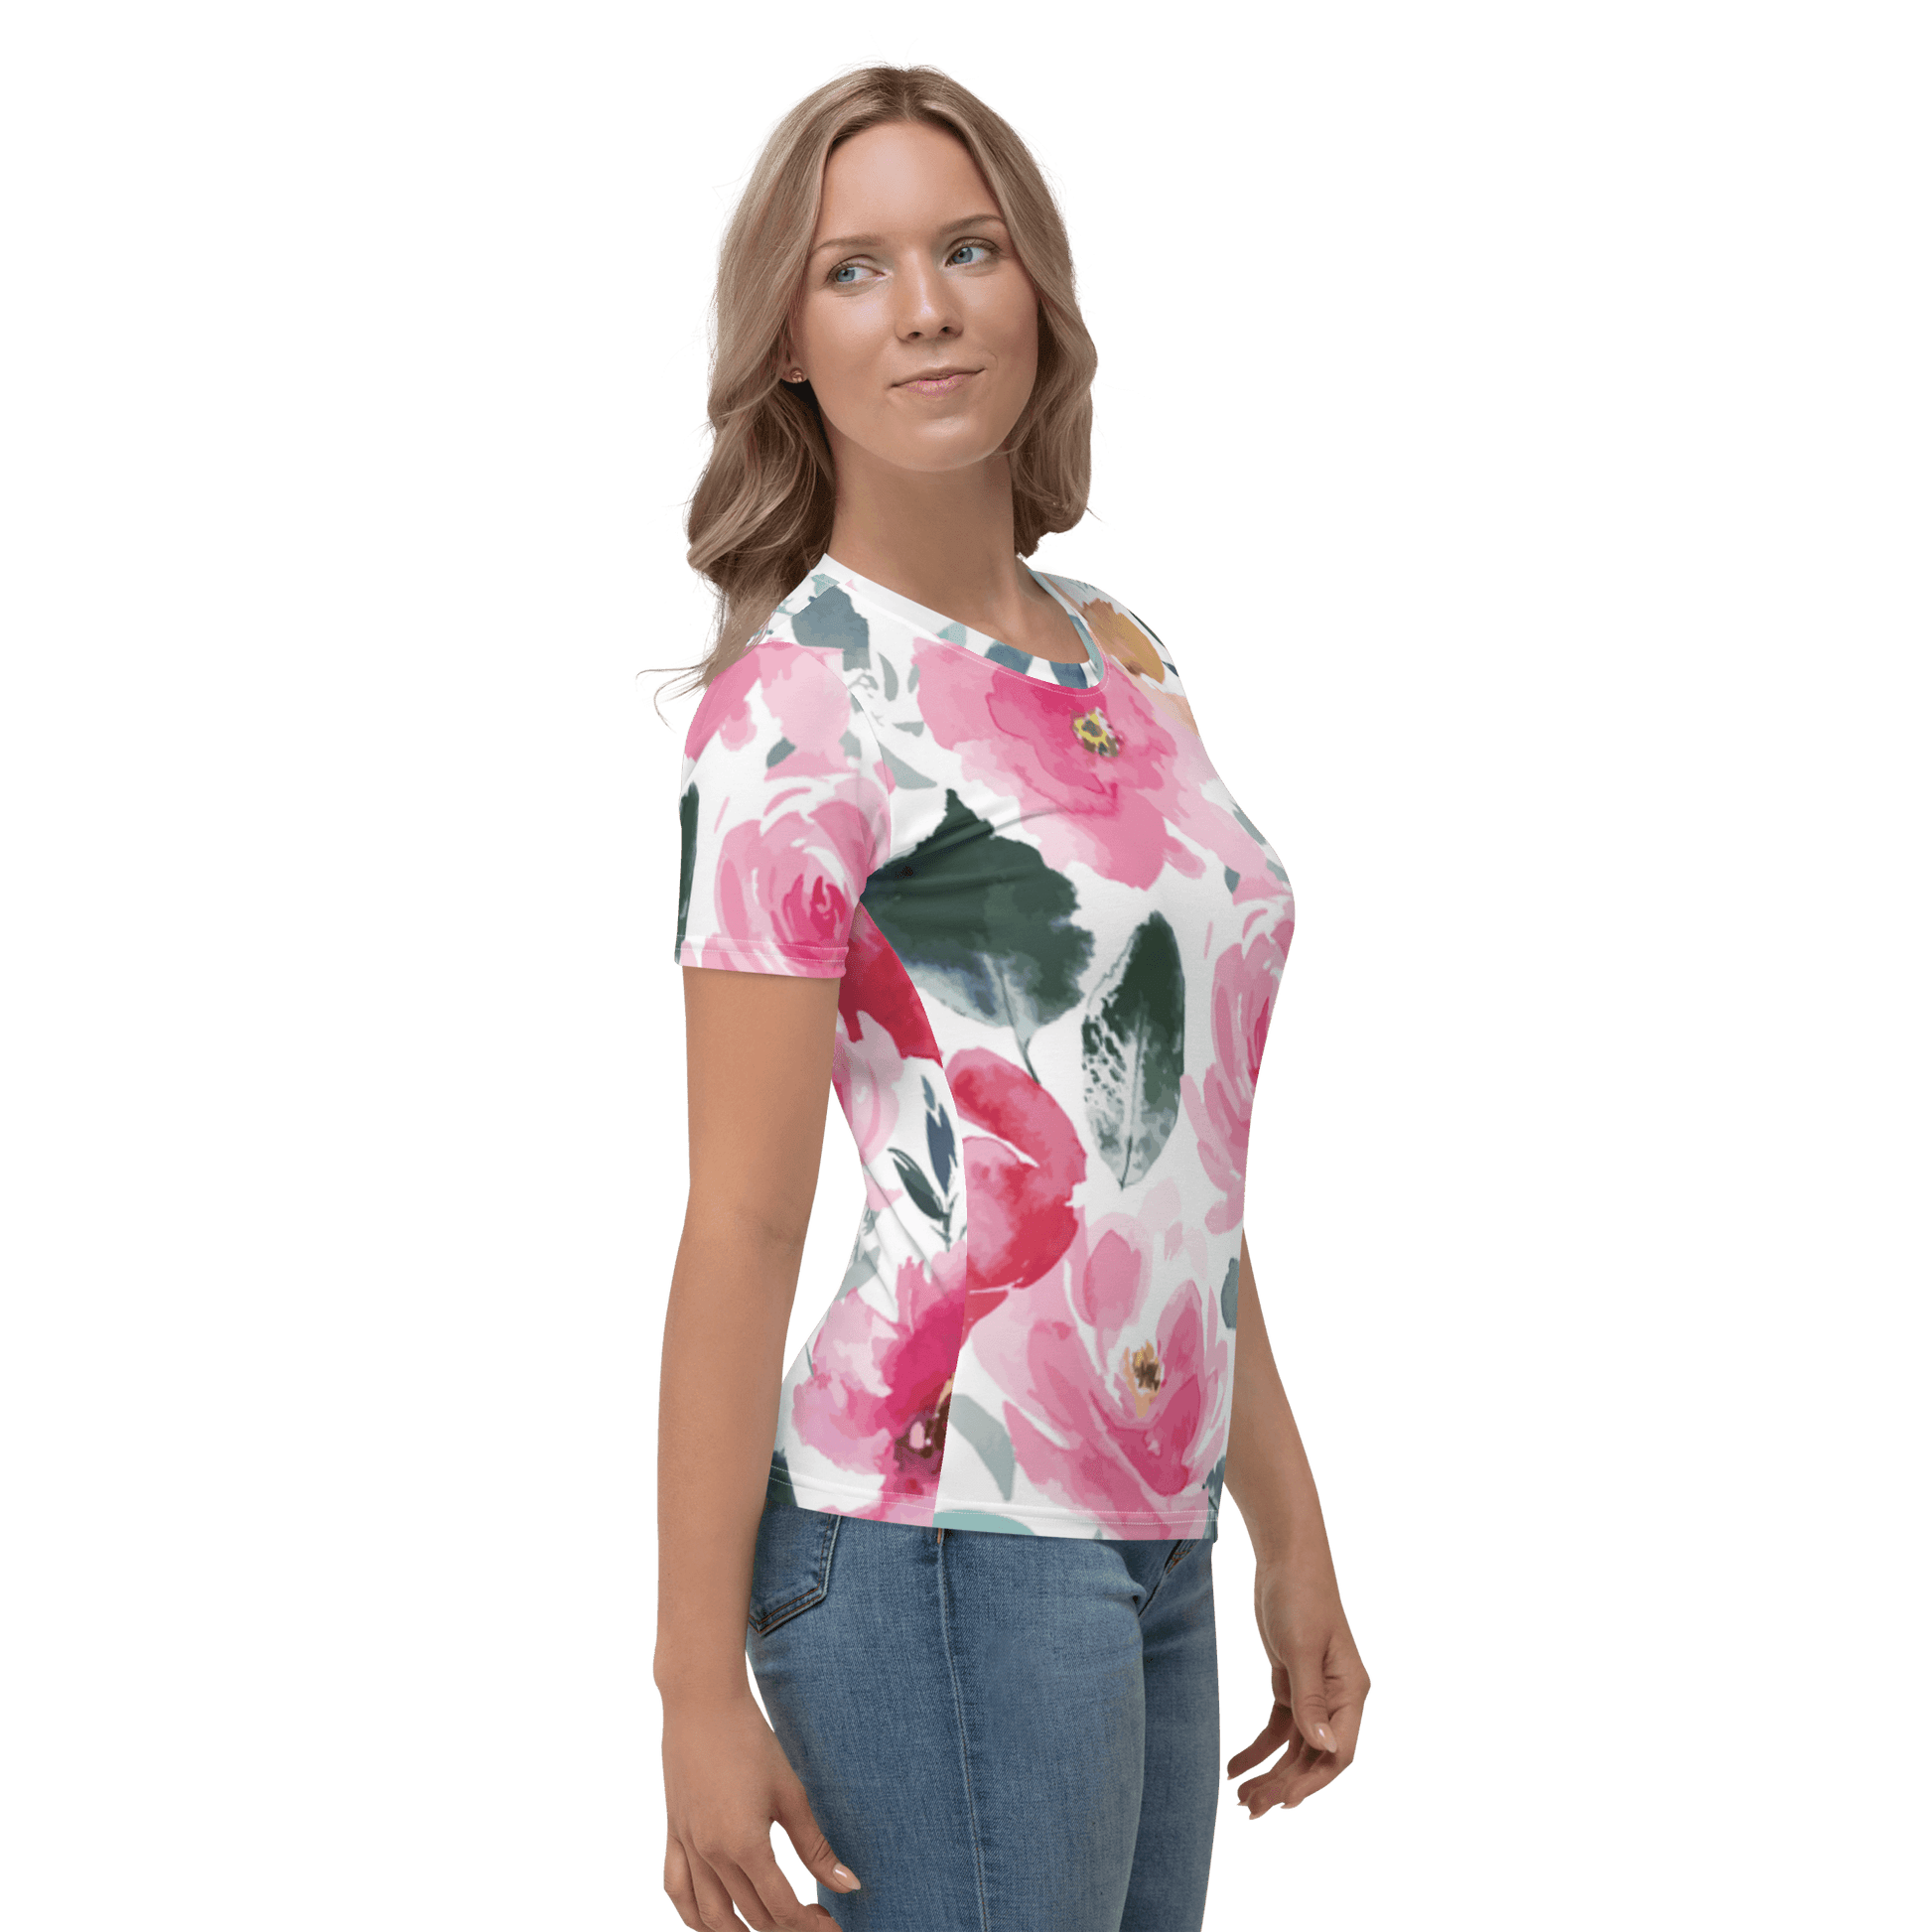 Roses T-shirt - L & M Kee, LLC